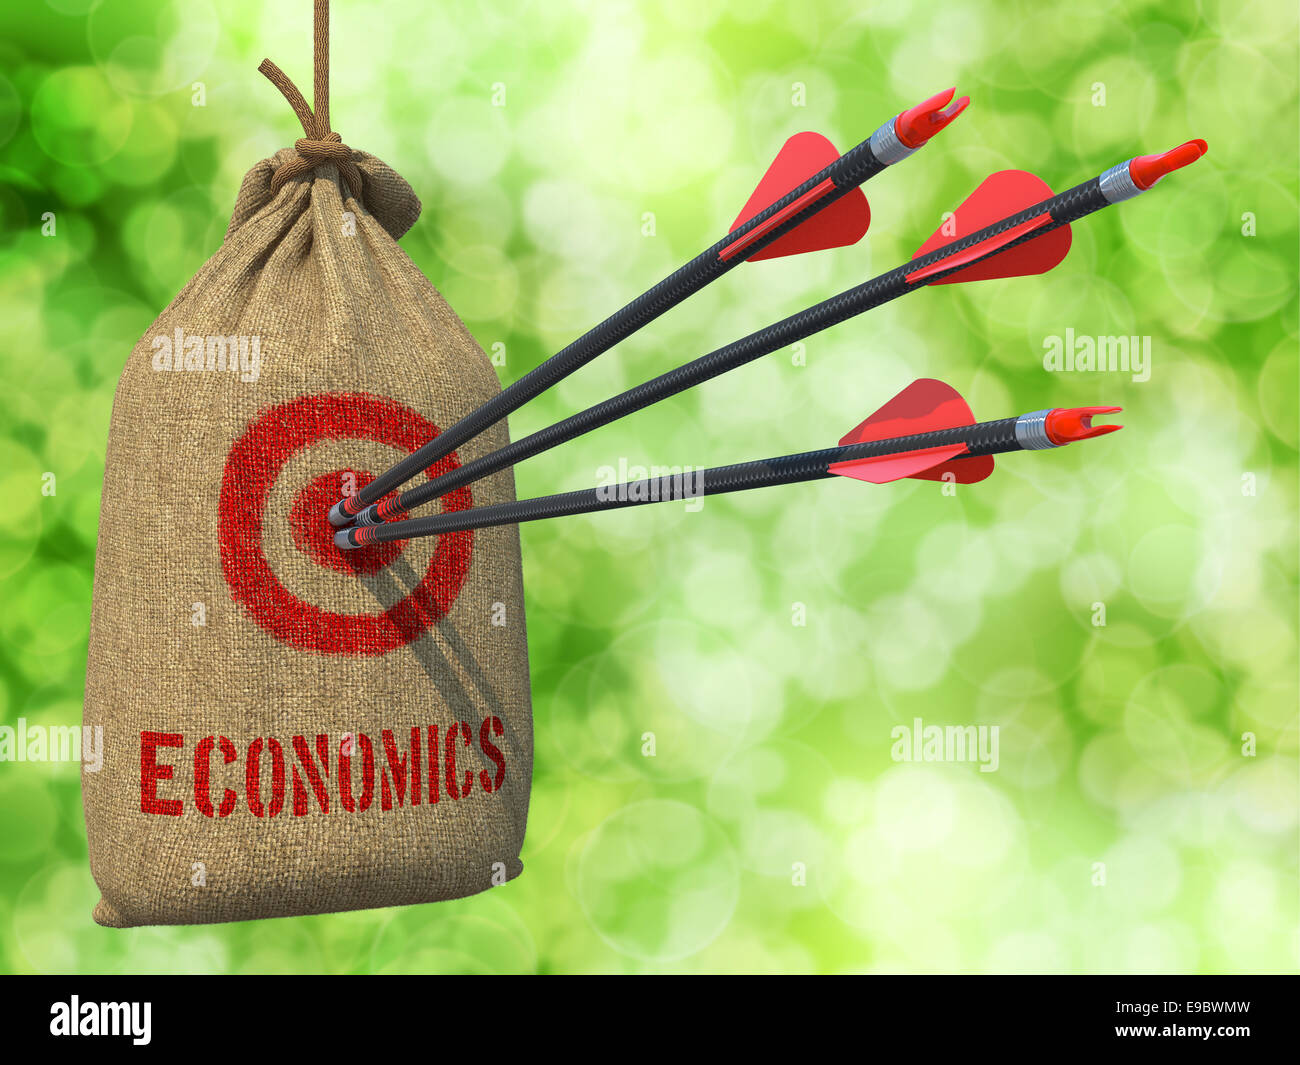 Economics - Arrows Hit in Red Mark Target. Stock Photo